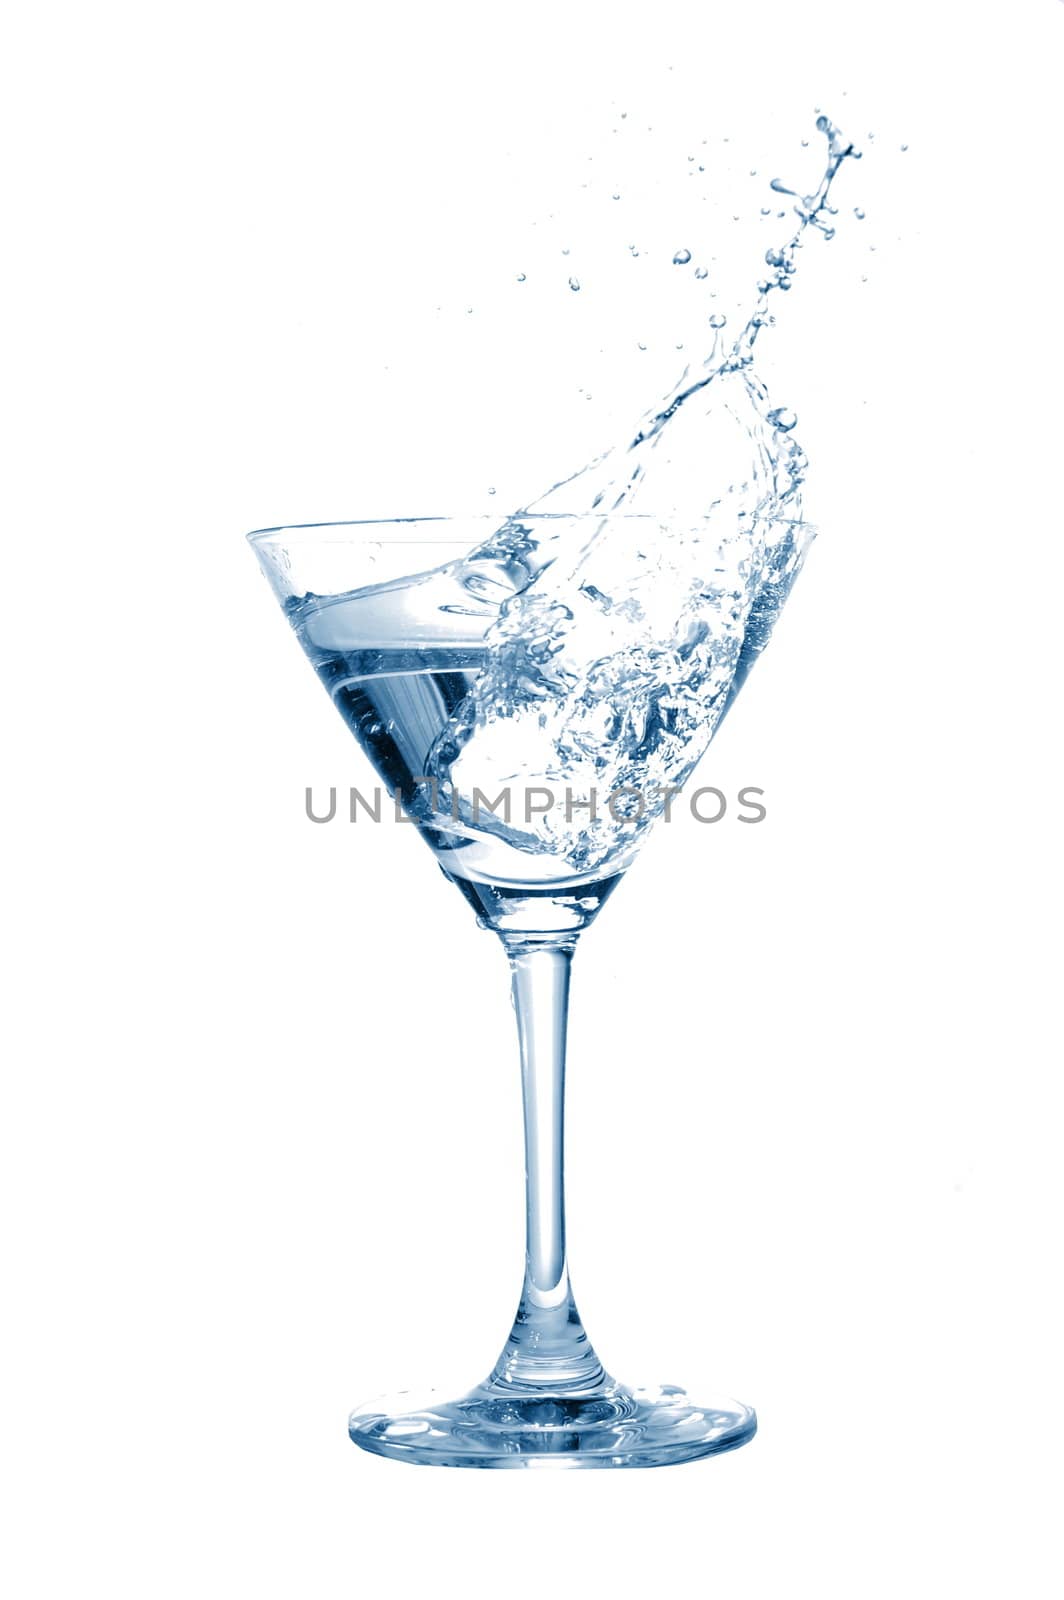 glass water by gunnar3000